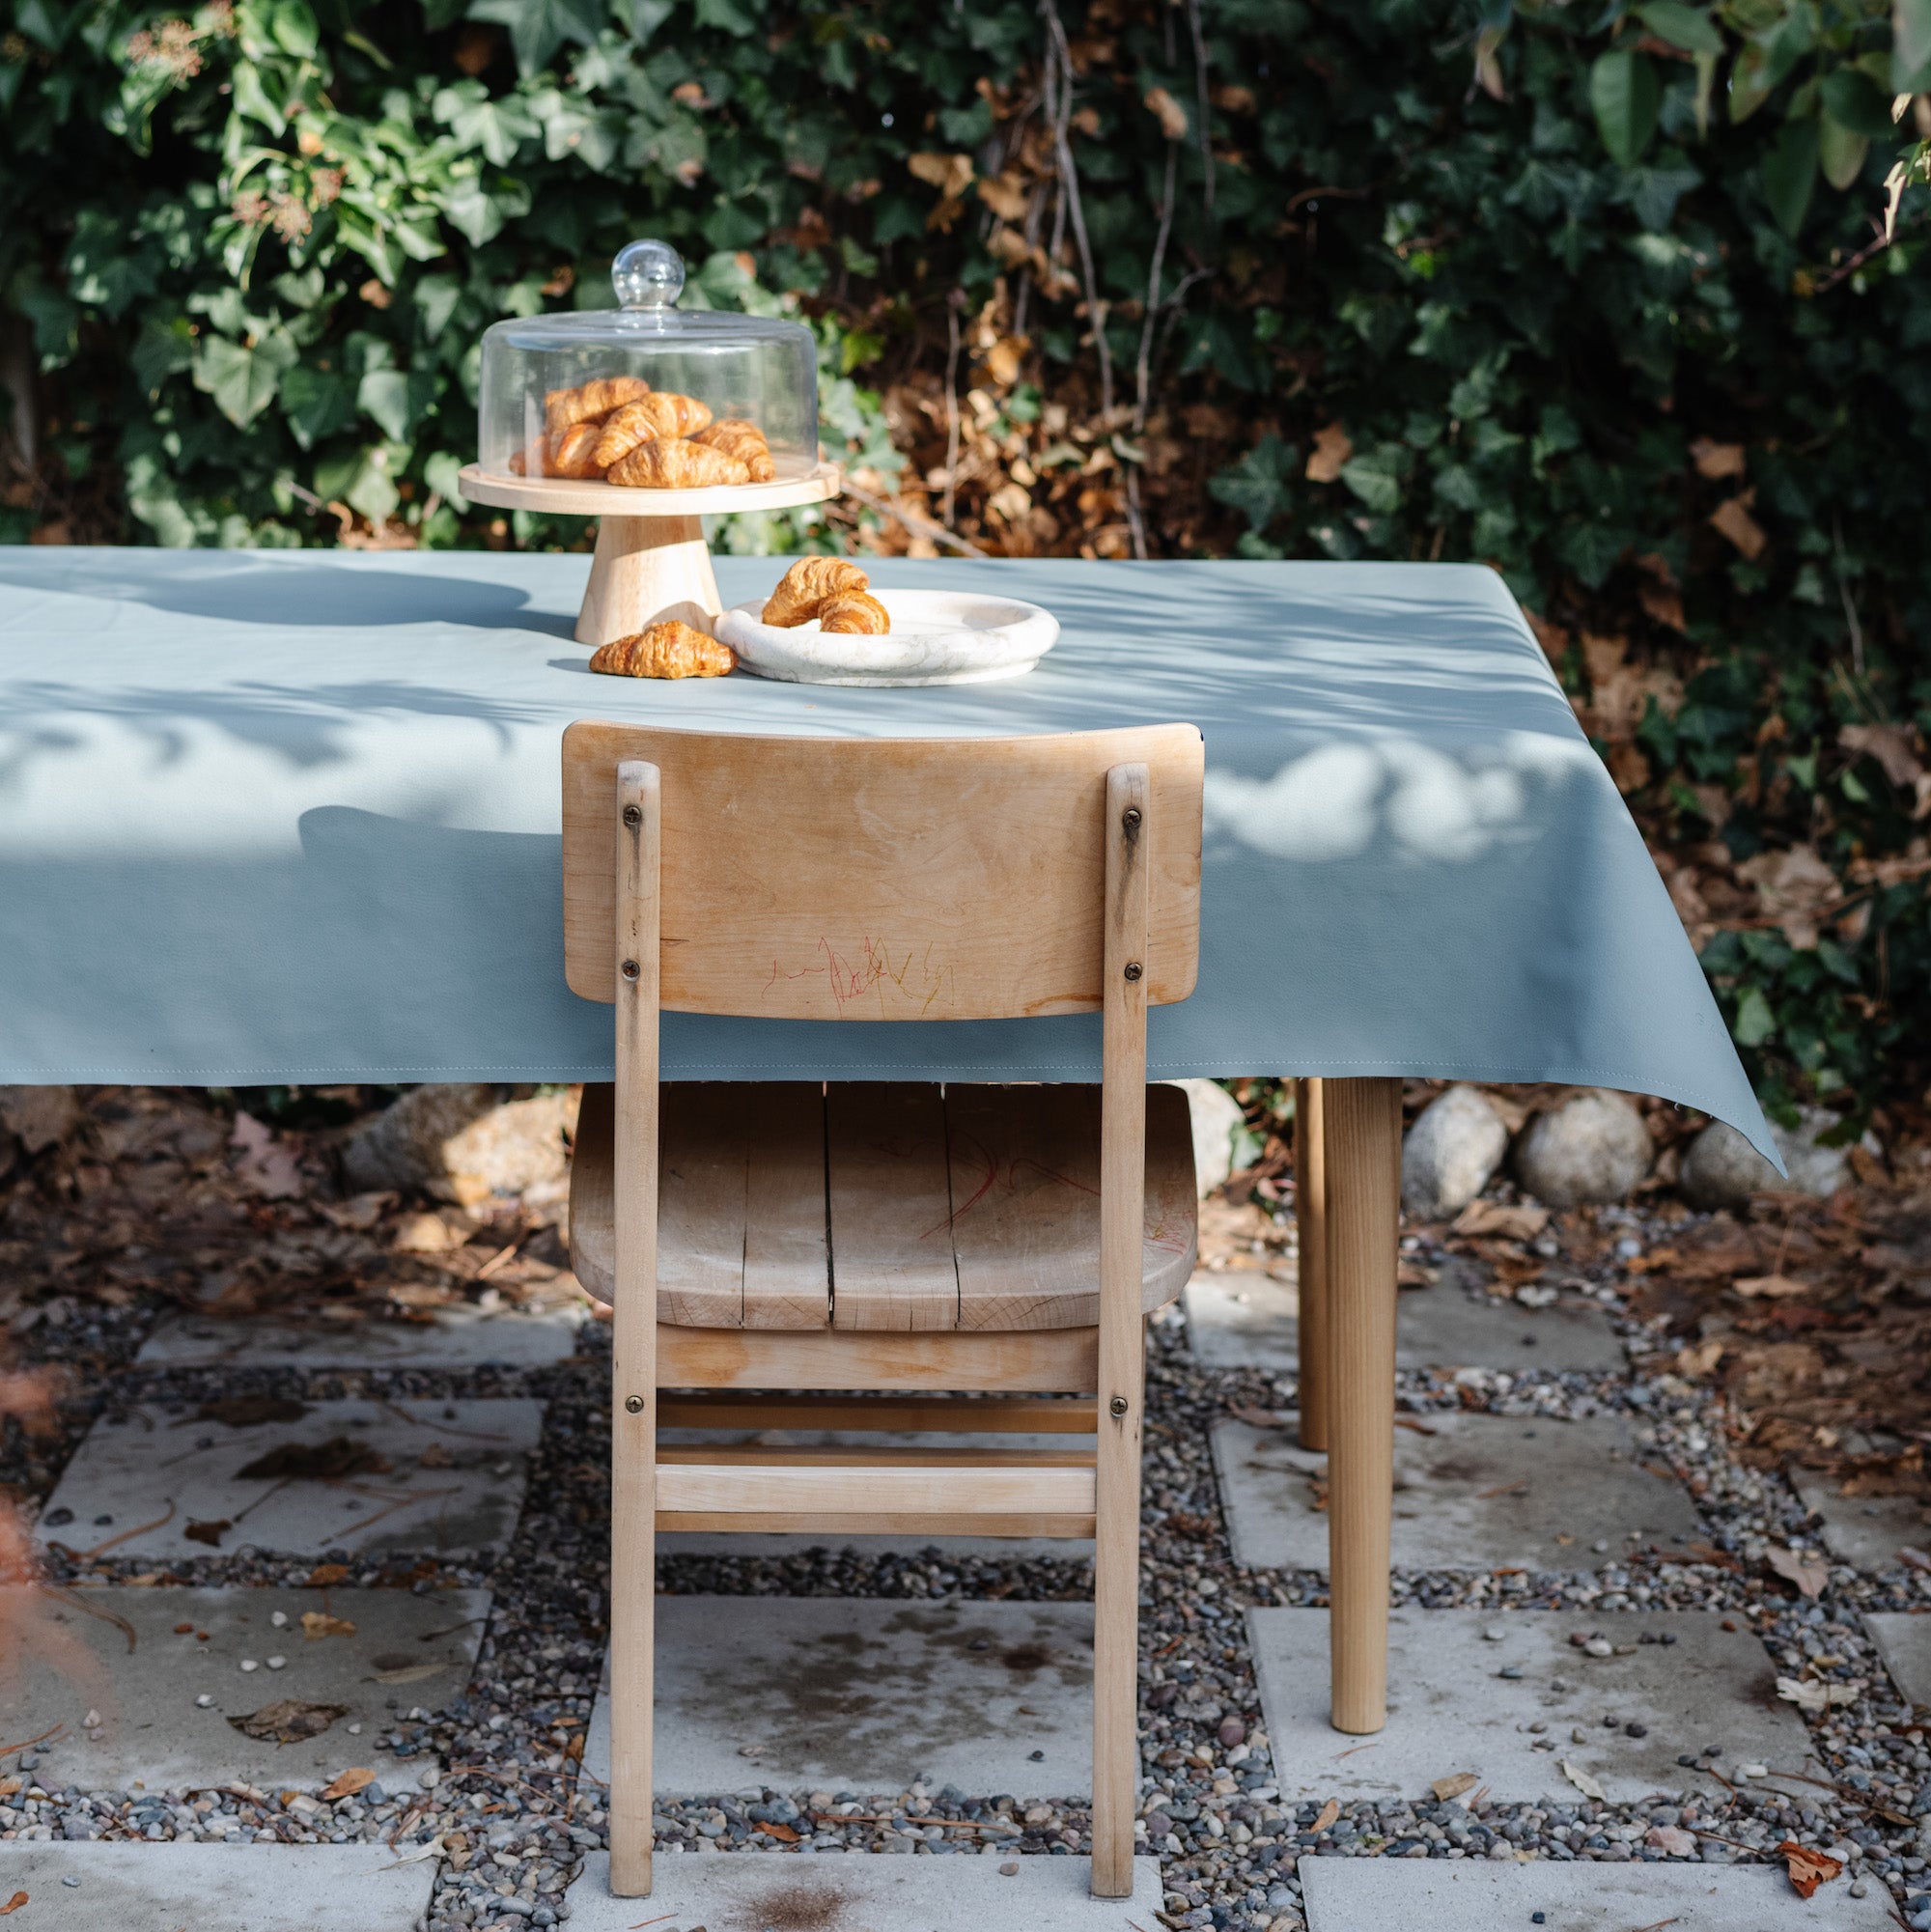 Amalfi / 6 Foot @Amalfi Tablecloth on a table outside near greenery